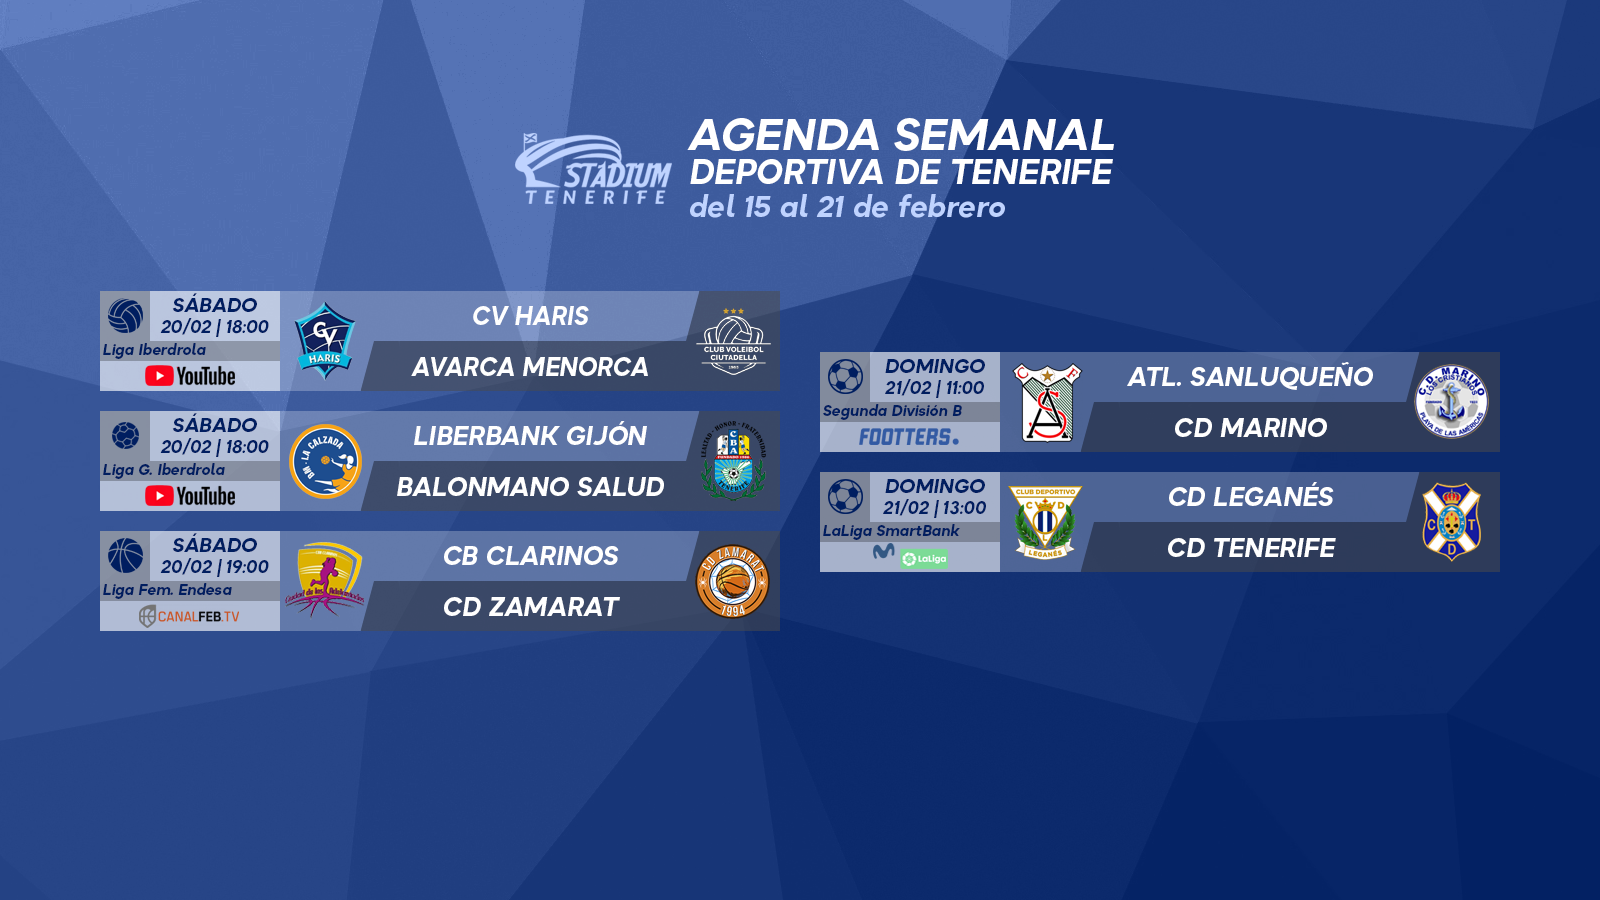 Agenda Semanal Deportiva de Tenerife (15 al 21 de febrero)